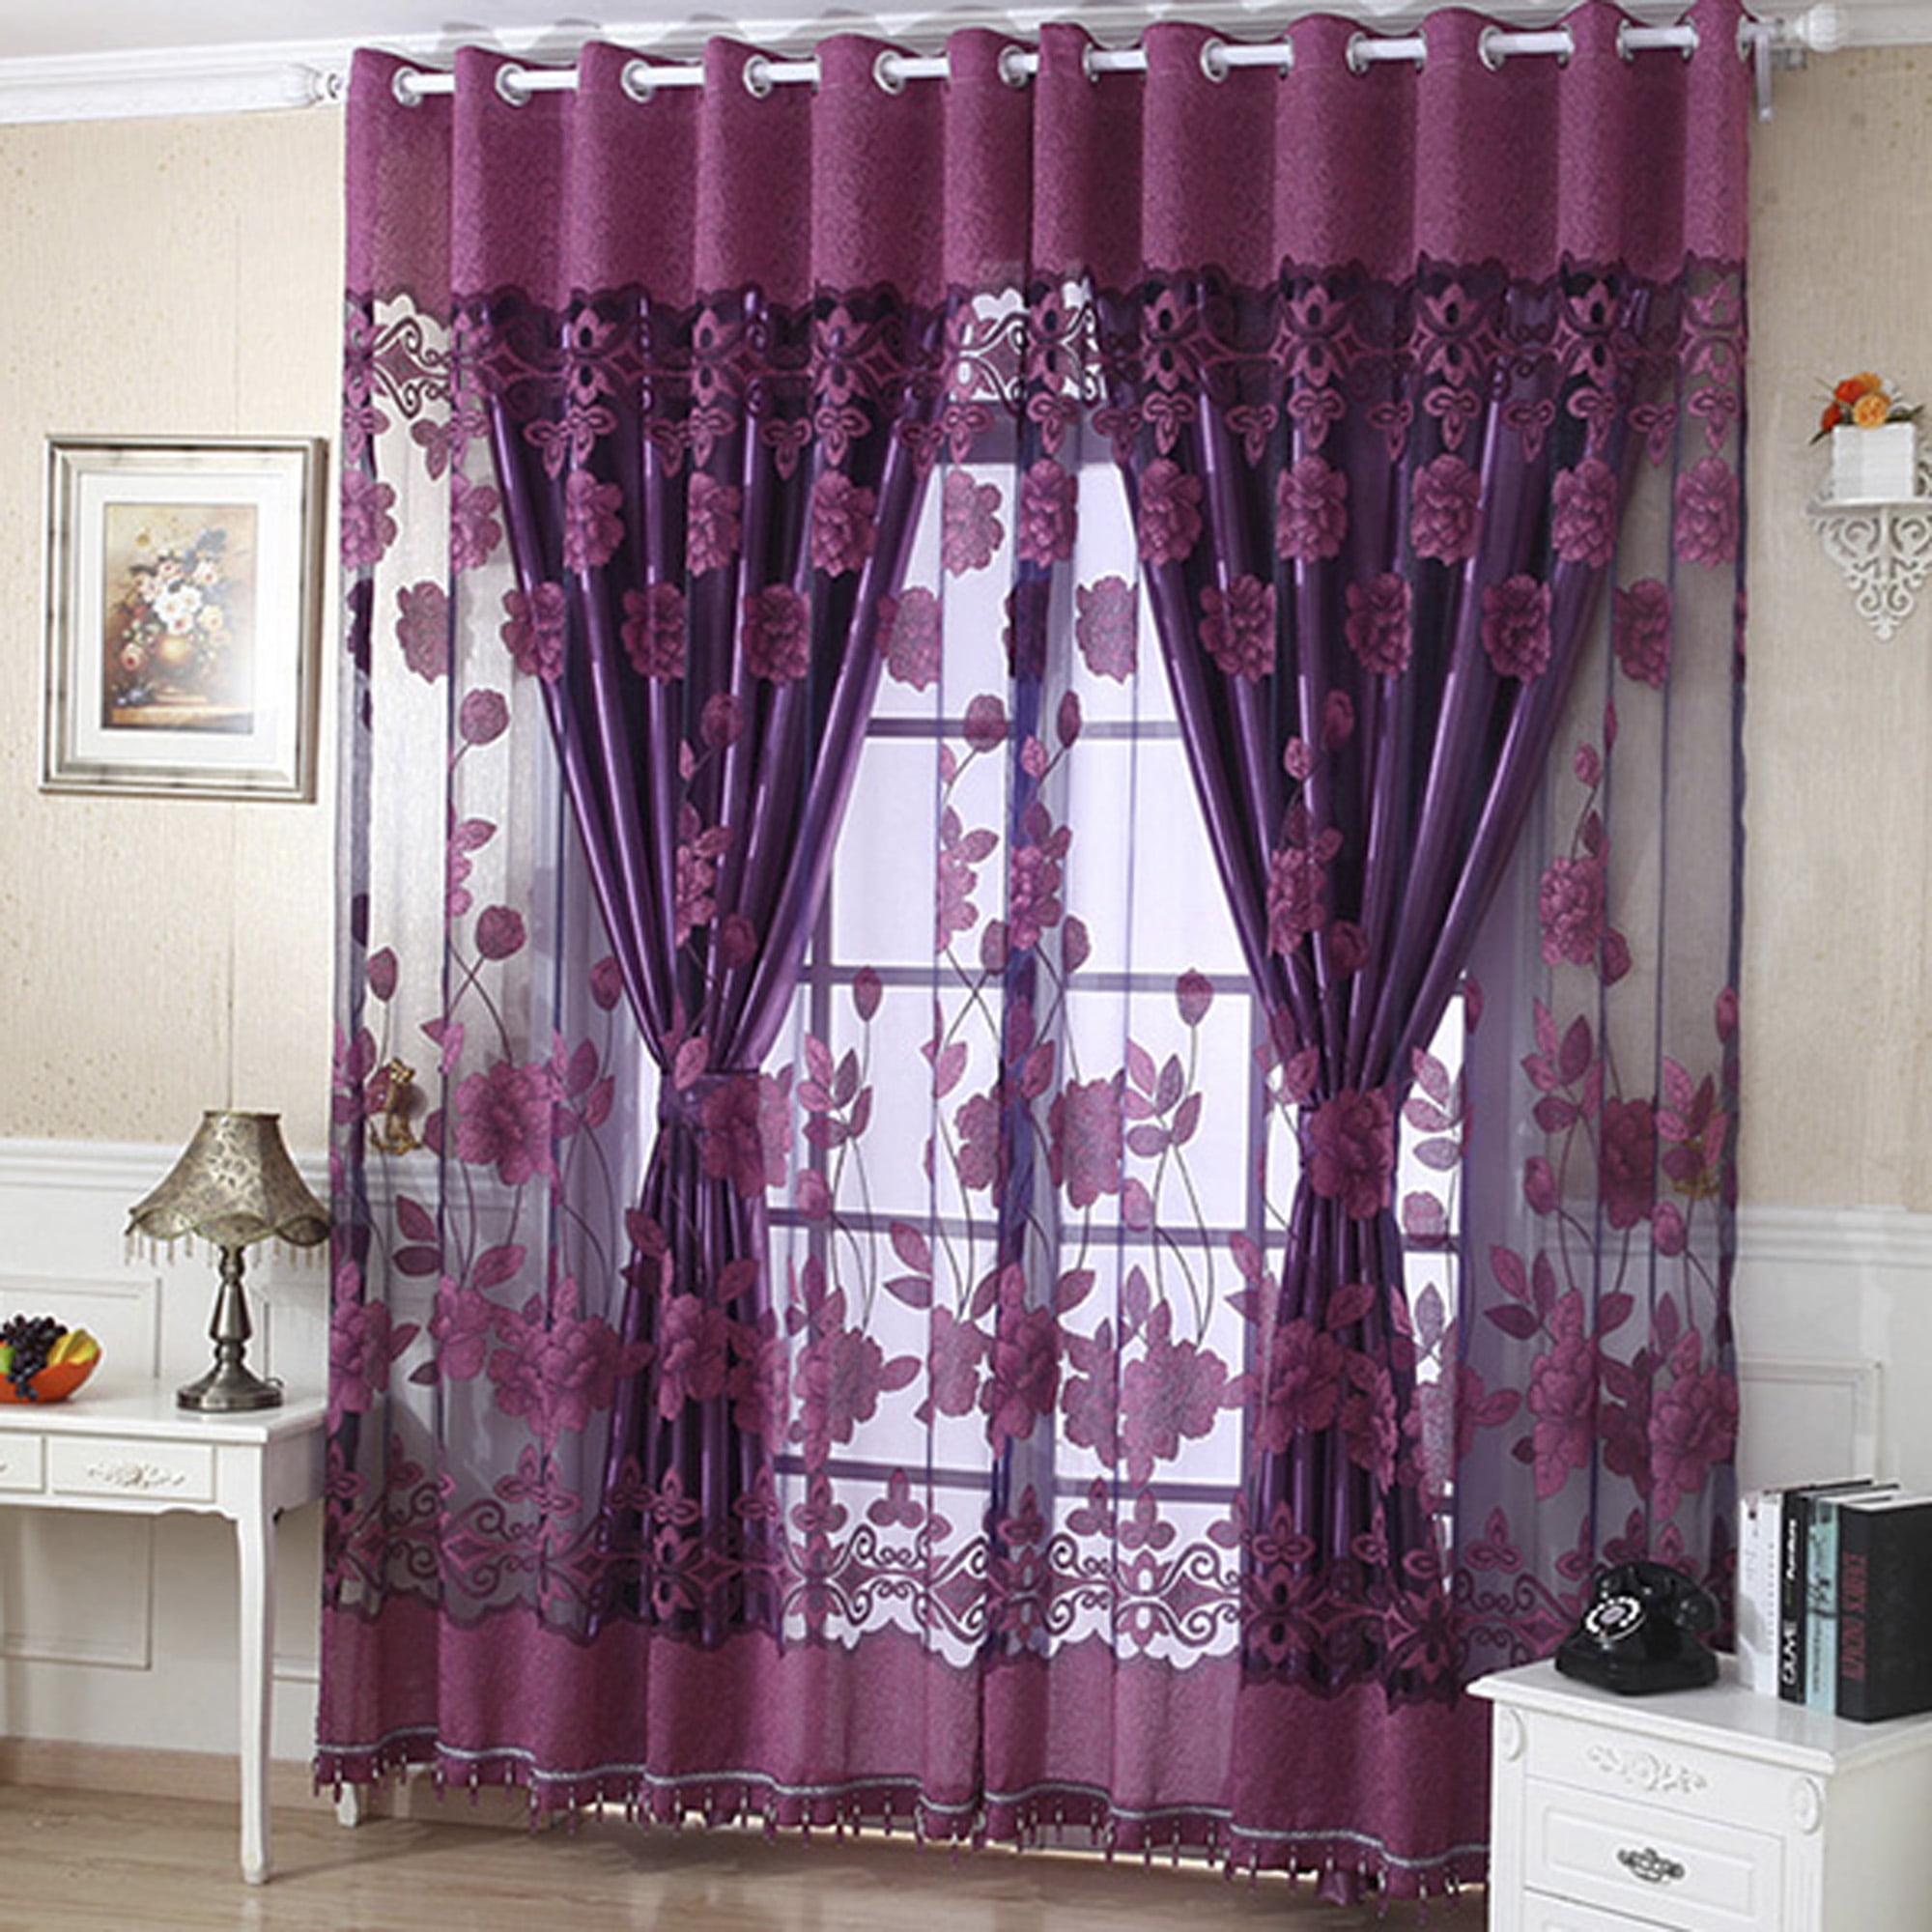 1pc Room Tulle Door Sheer Voile Window Valances Panel Drape Curtain Tulle Scarf 